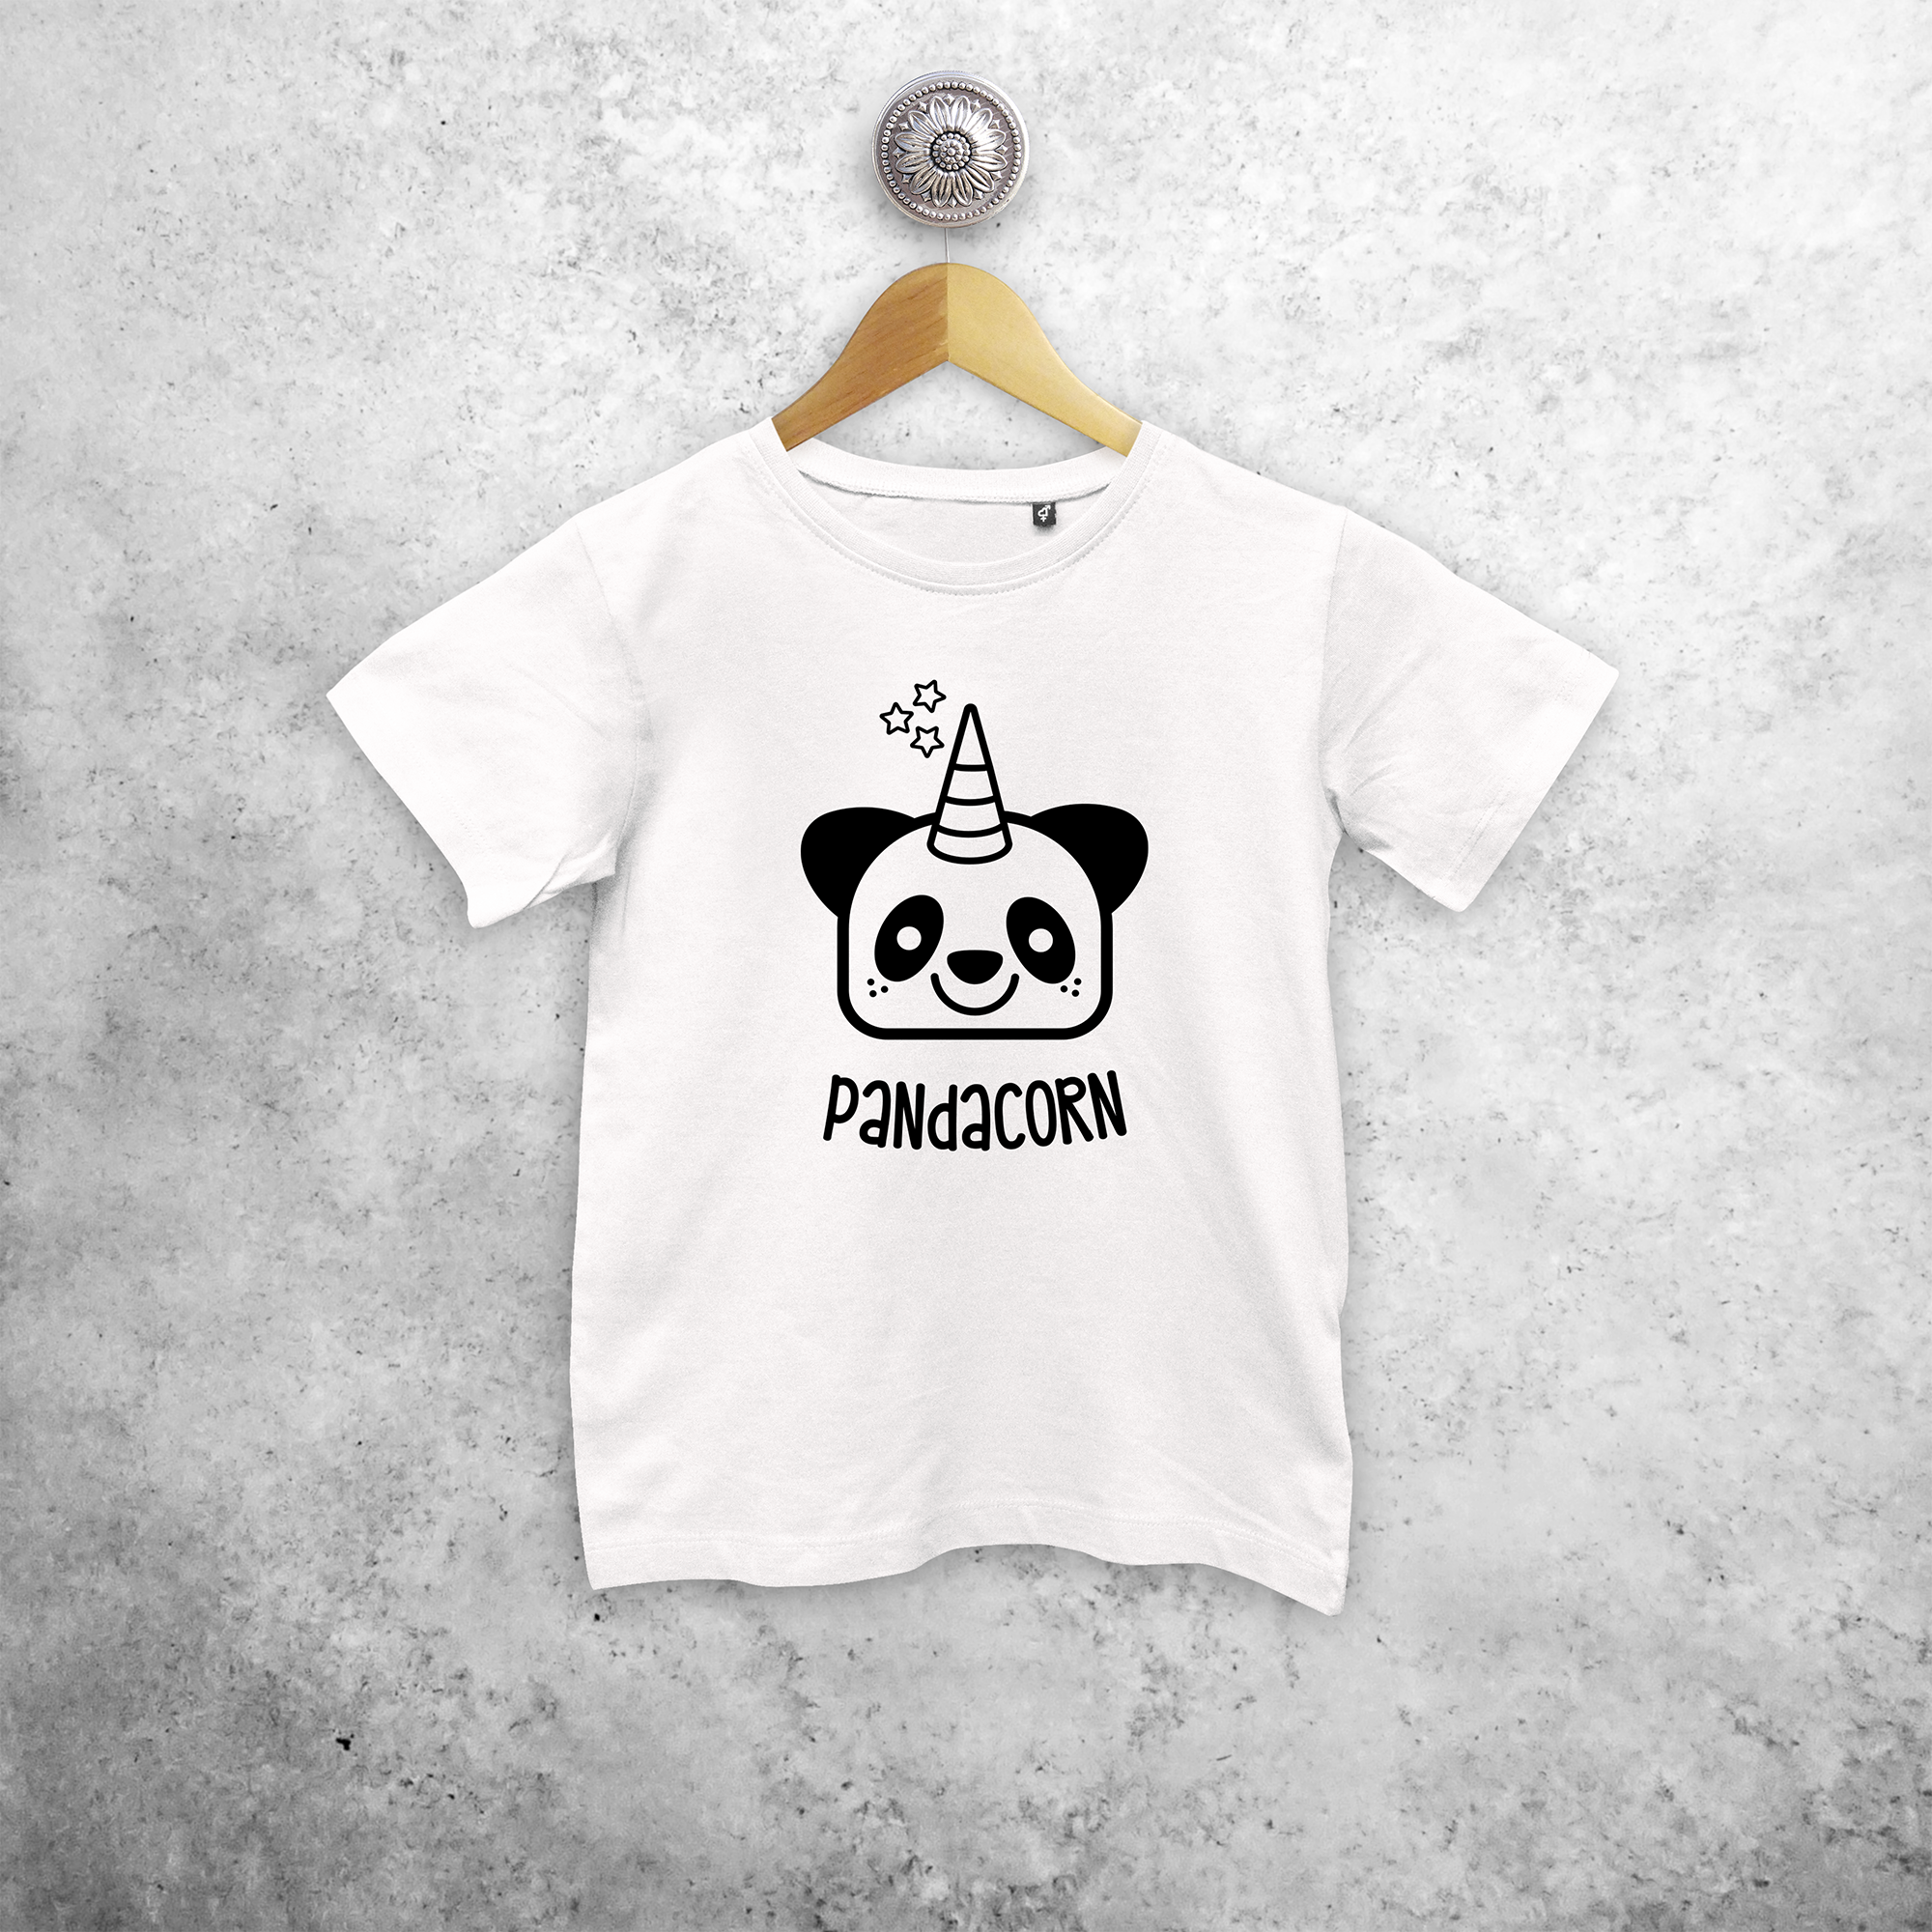 Pandacorn kids shortsleeve shirt